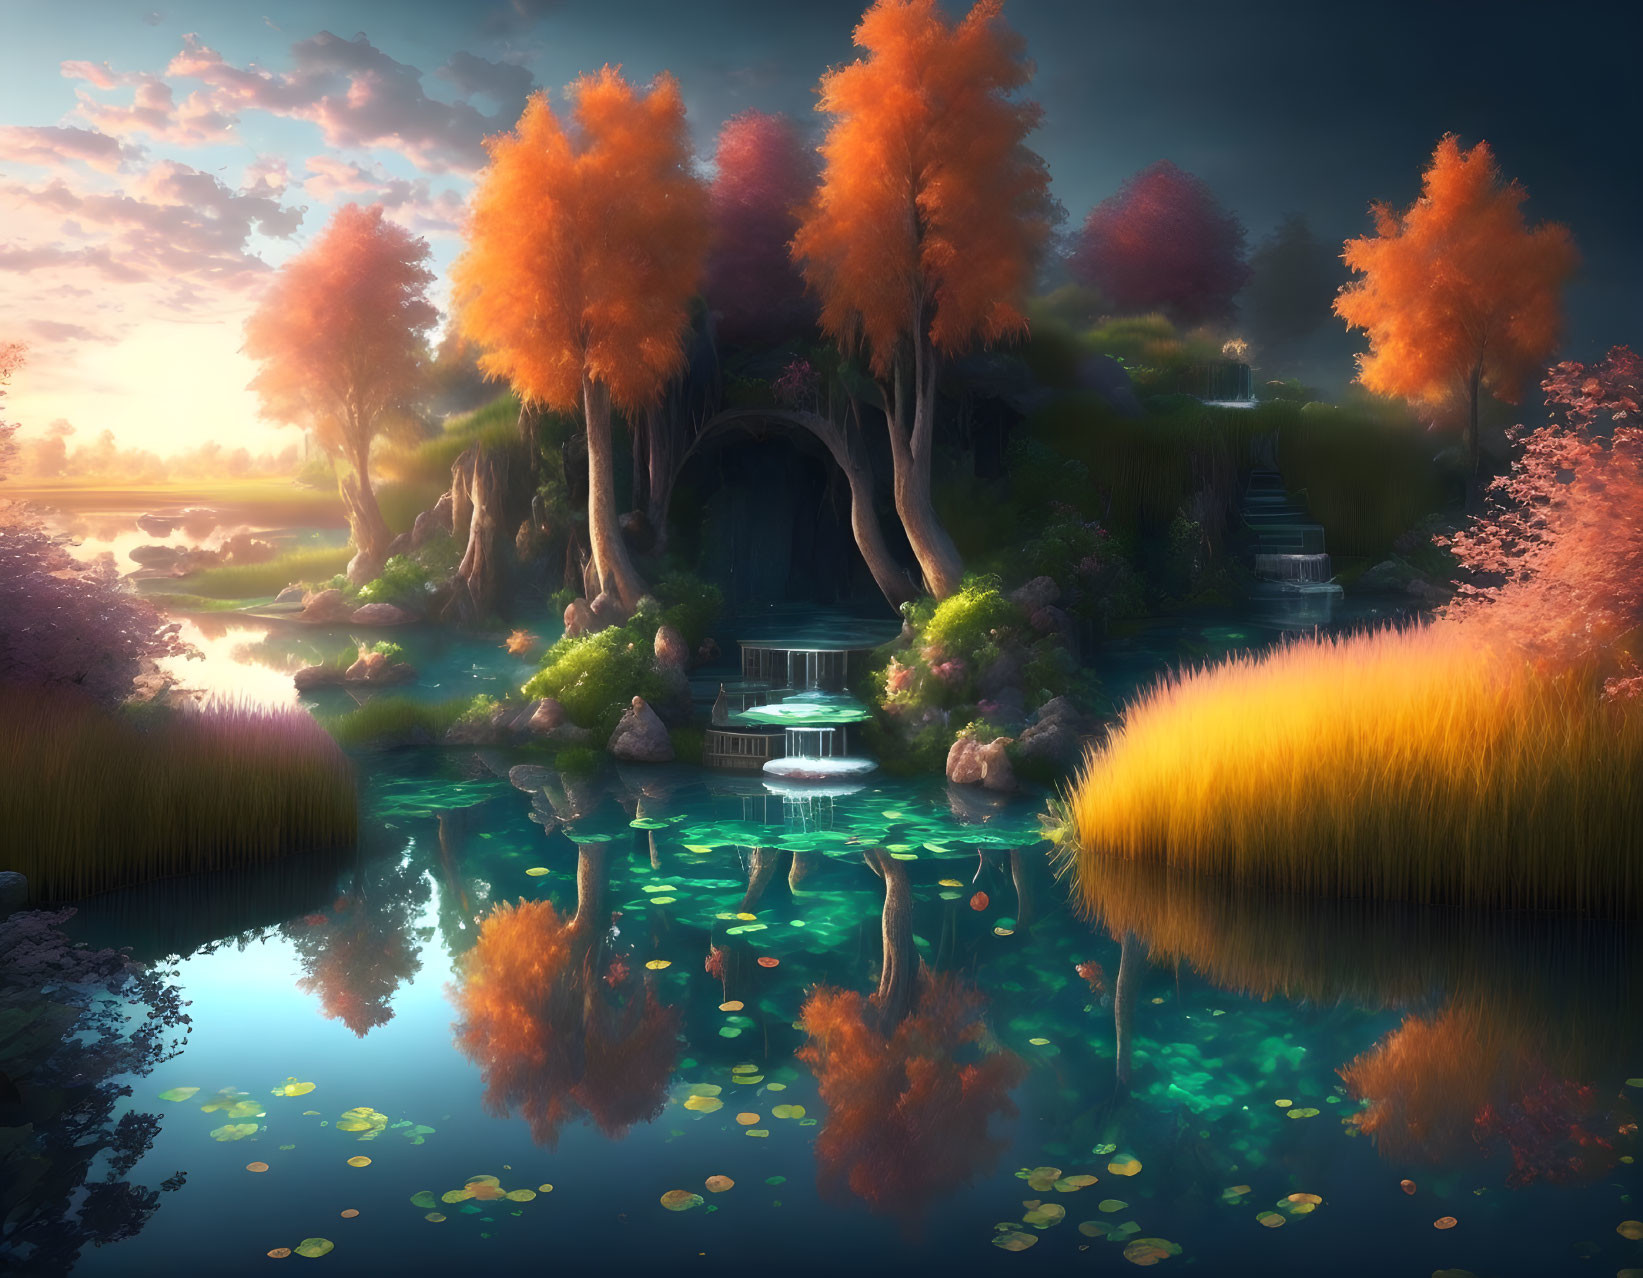 Vibrant orange trees, serene lake, cave entrance, and twilight waterfalls in mystical landscape